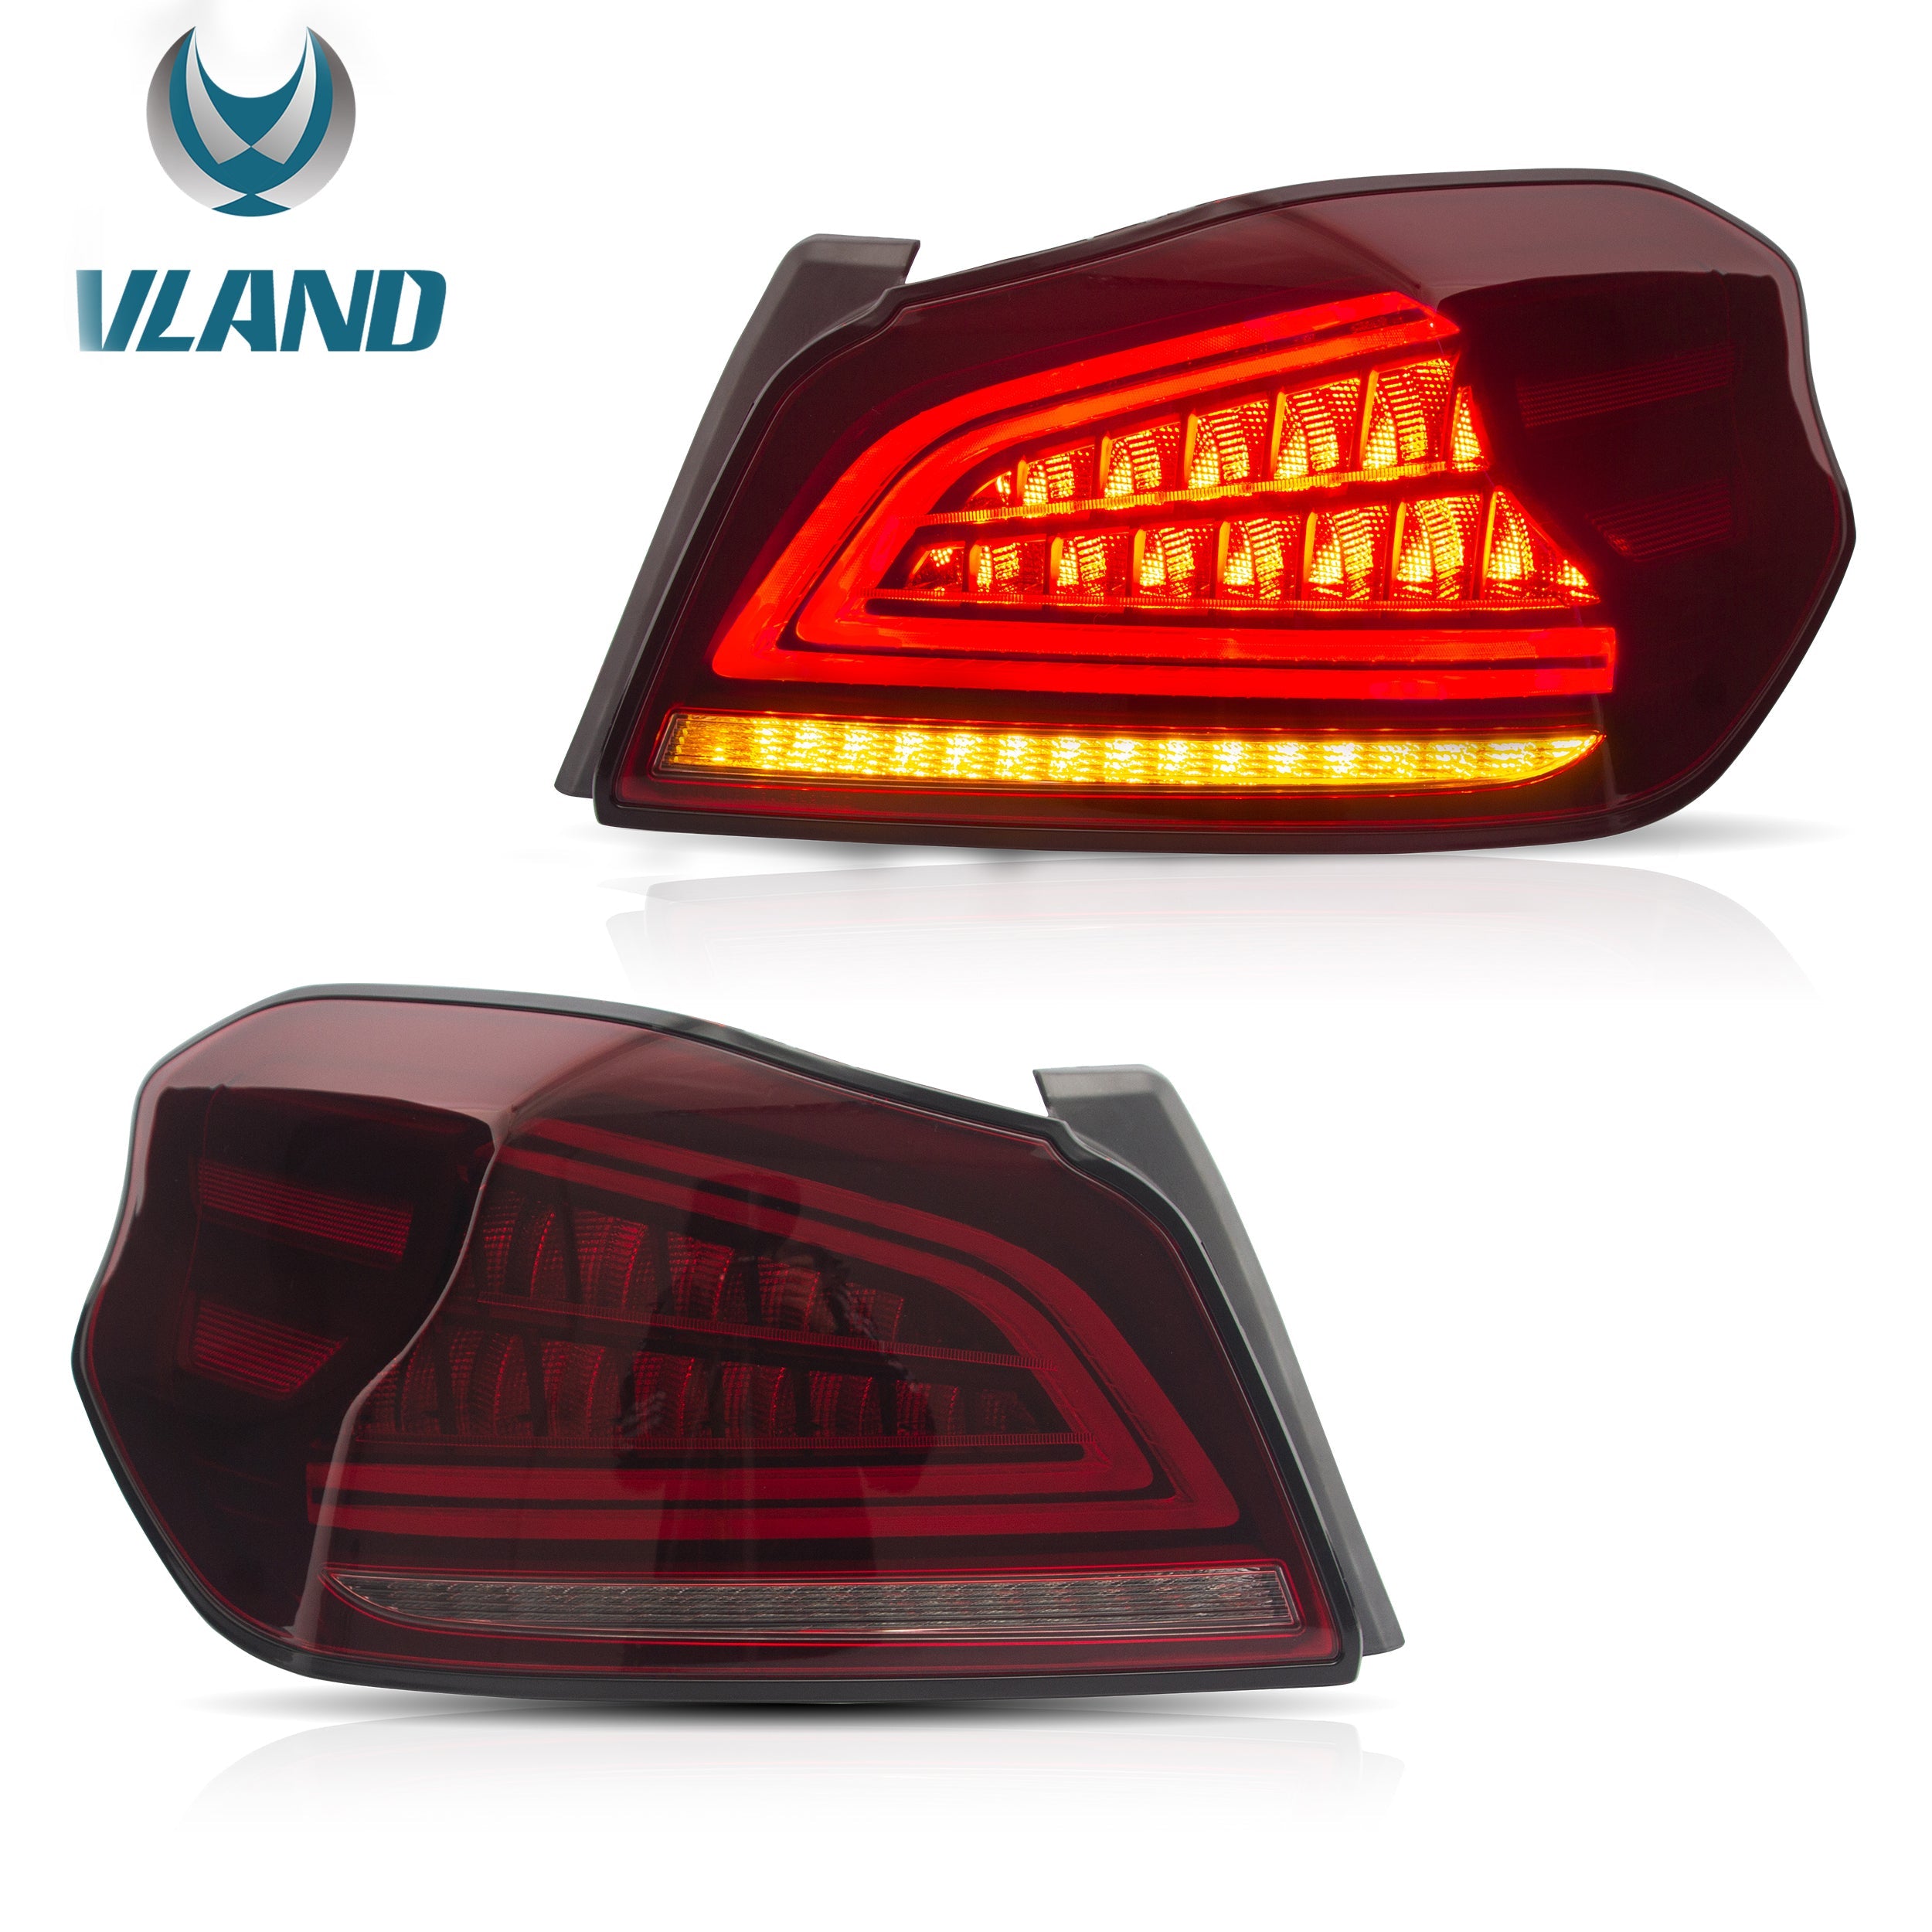 VLAND TAIL LIGHT ASSEMBLY FIT FOR 2015-2019 Subaru WRX / STI 汽车照明系统 Vland Manufacturer RED 